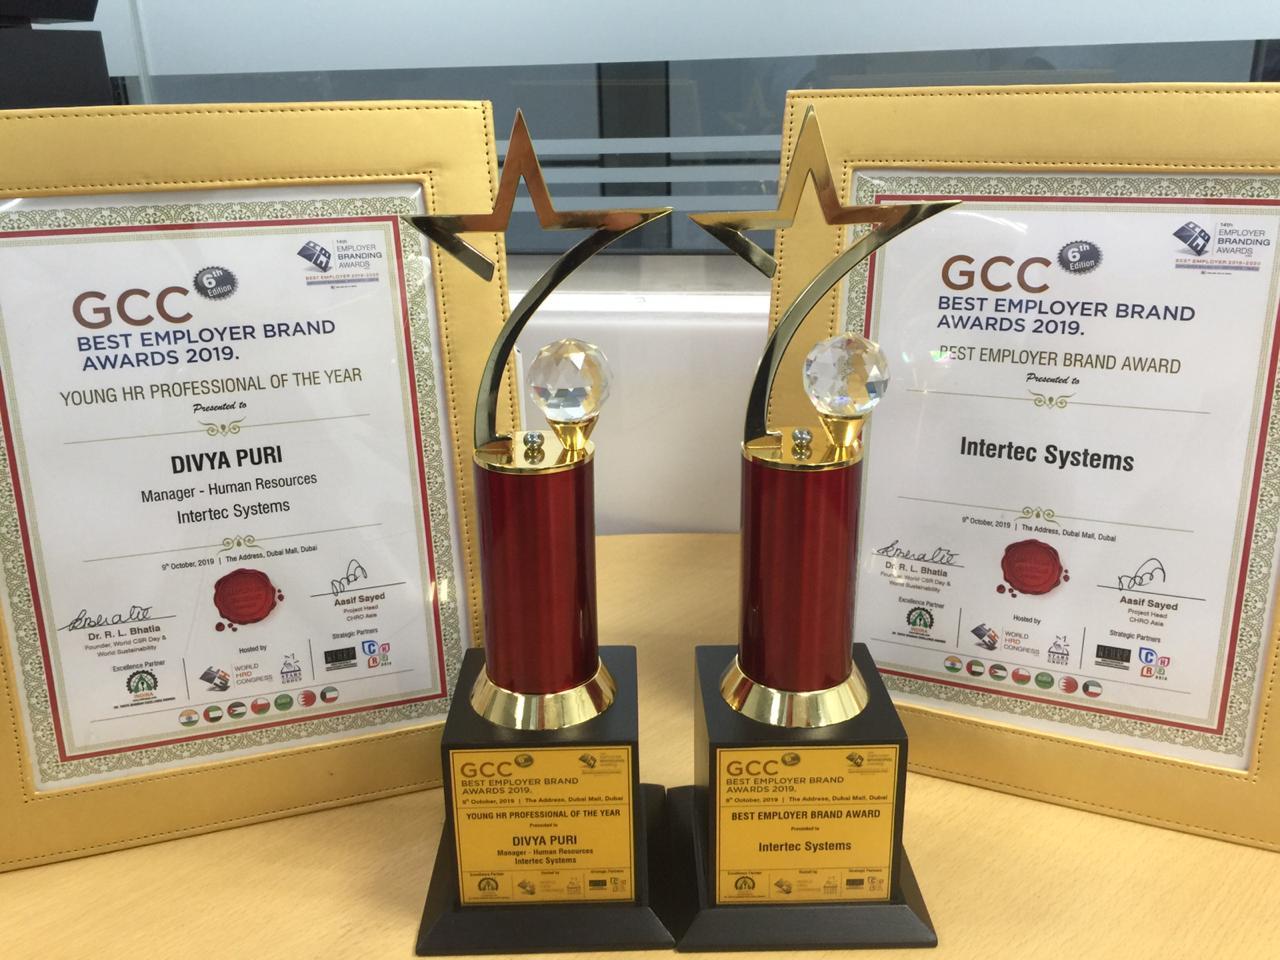 GCC Best Employer Brand Awards 2019